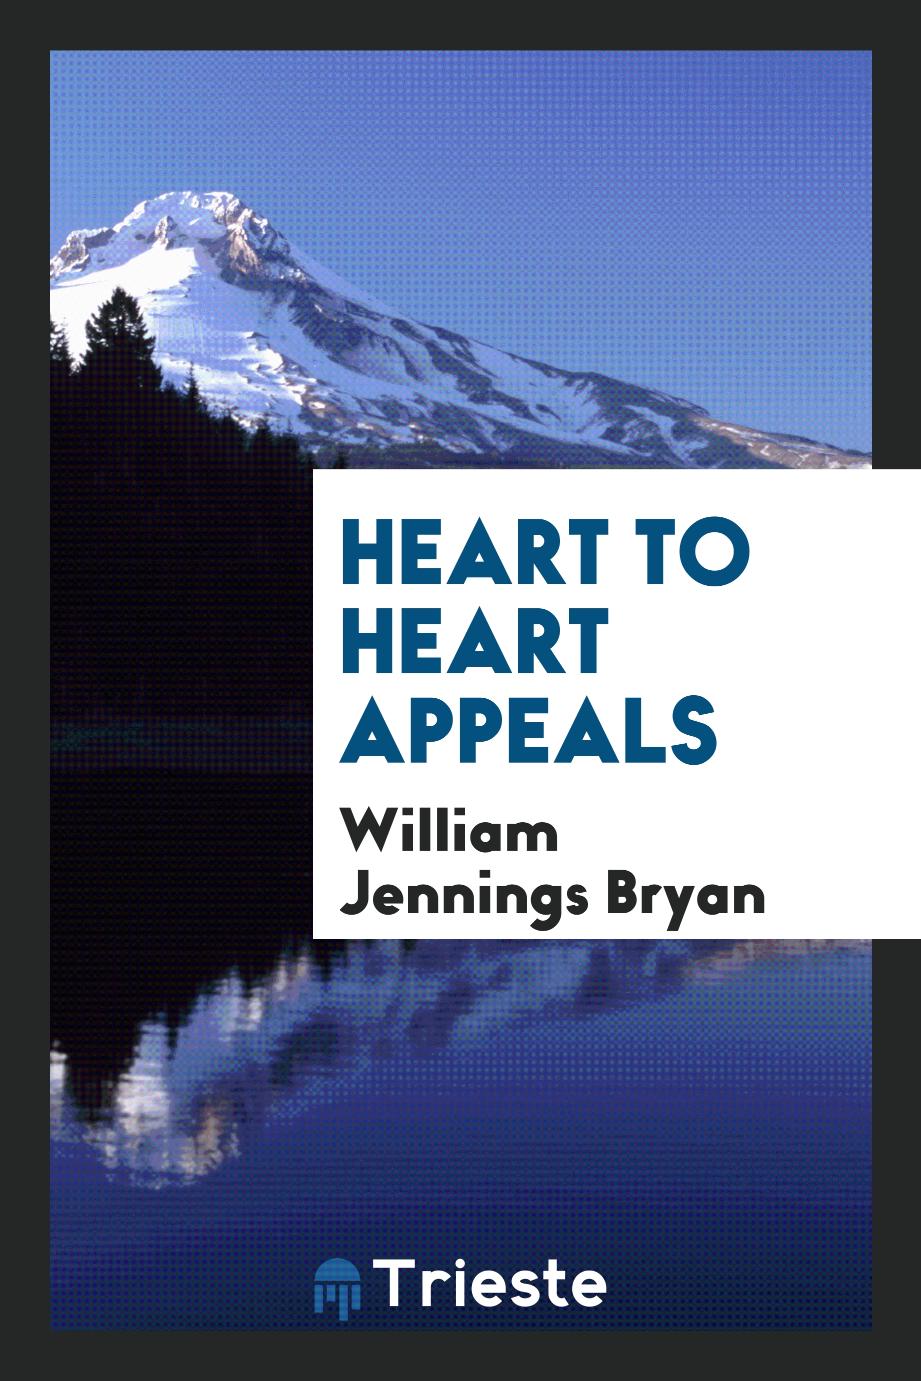 Heart to heart appeals